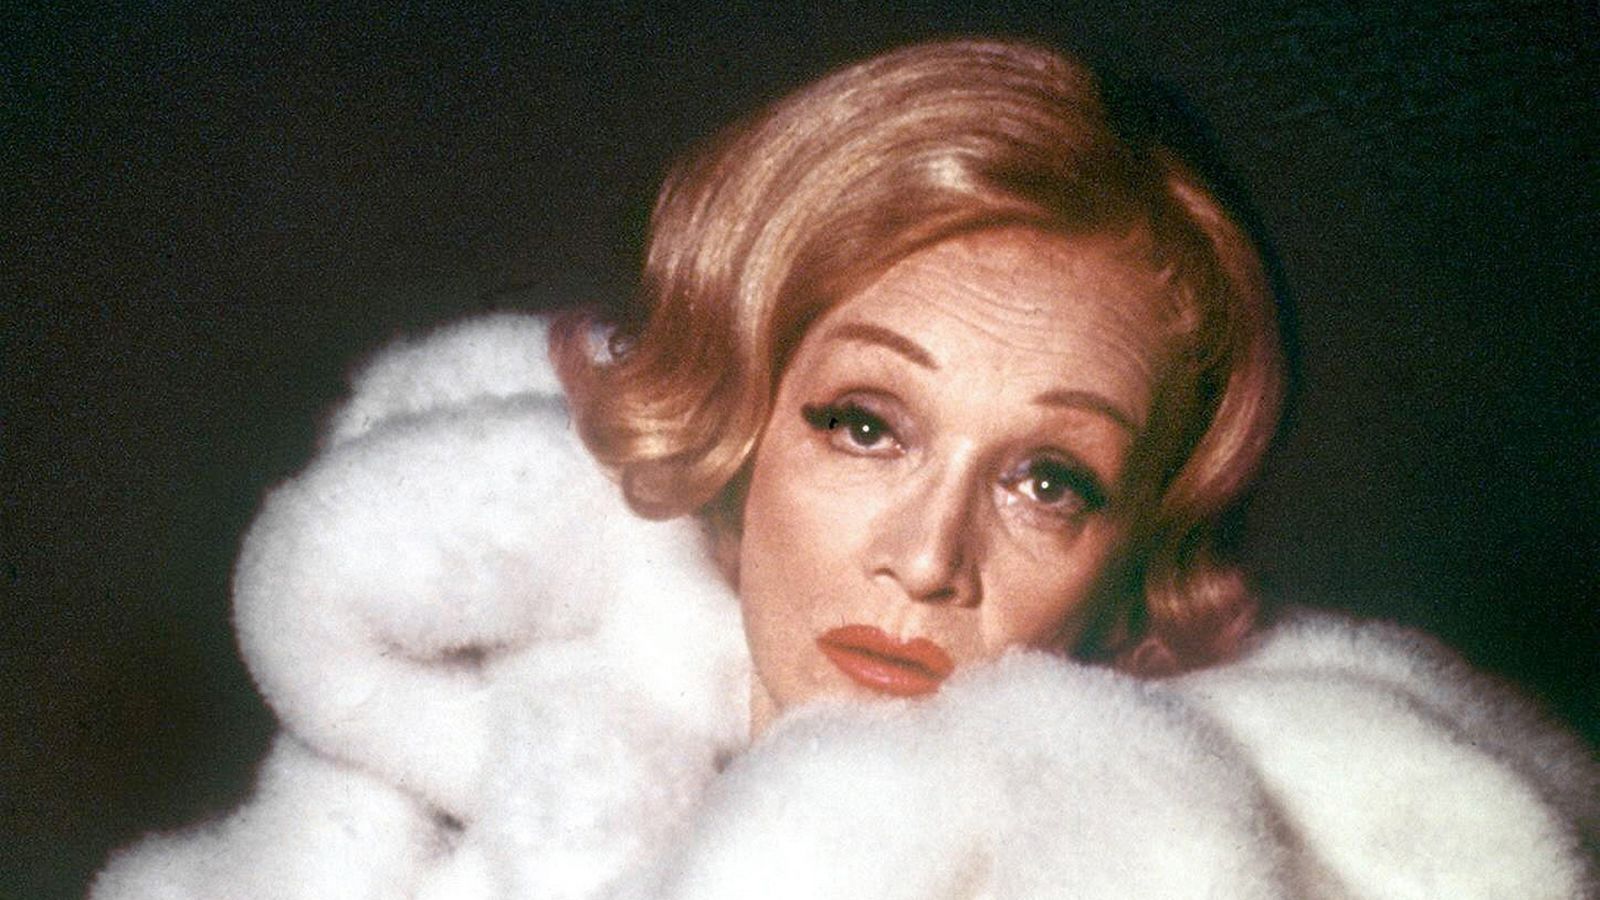 Telediario 1: El legado de Marlene Dietrich | RTVE Play